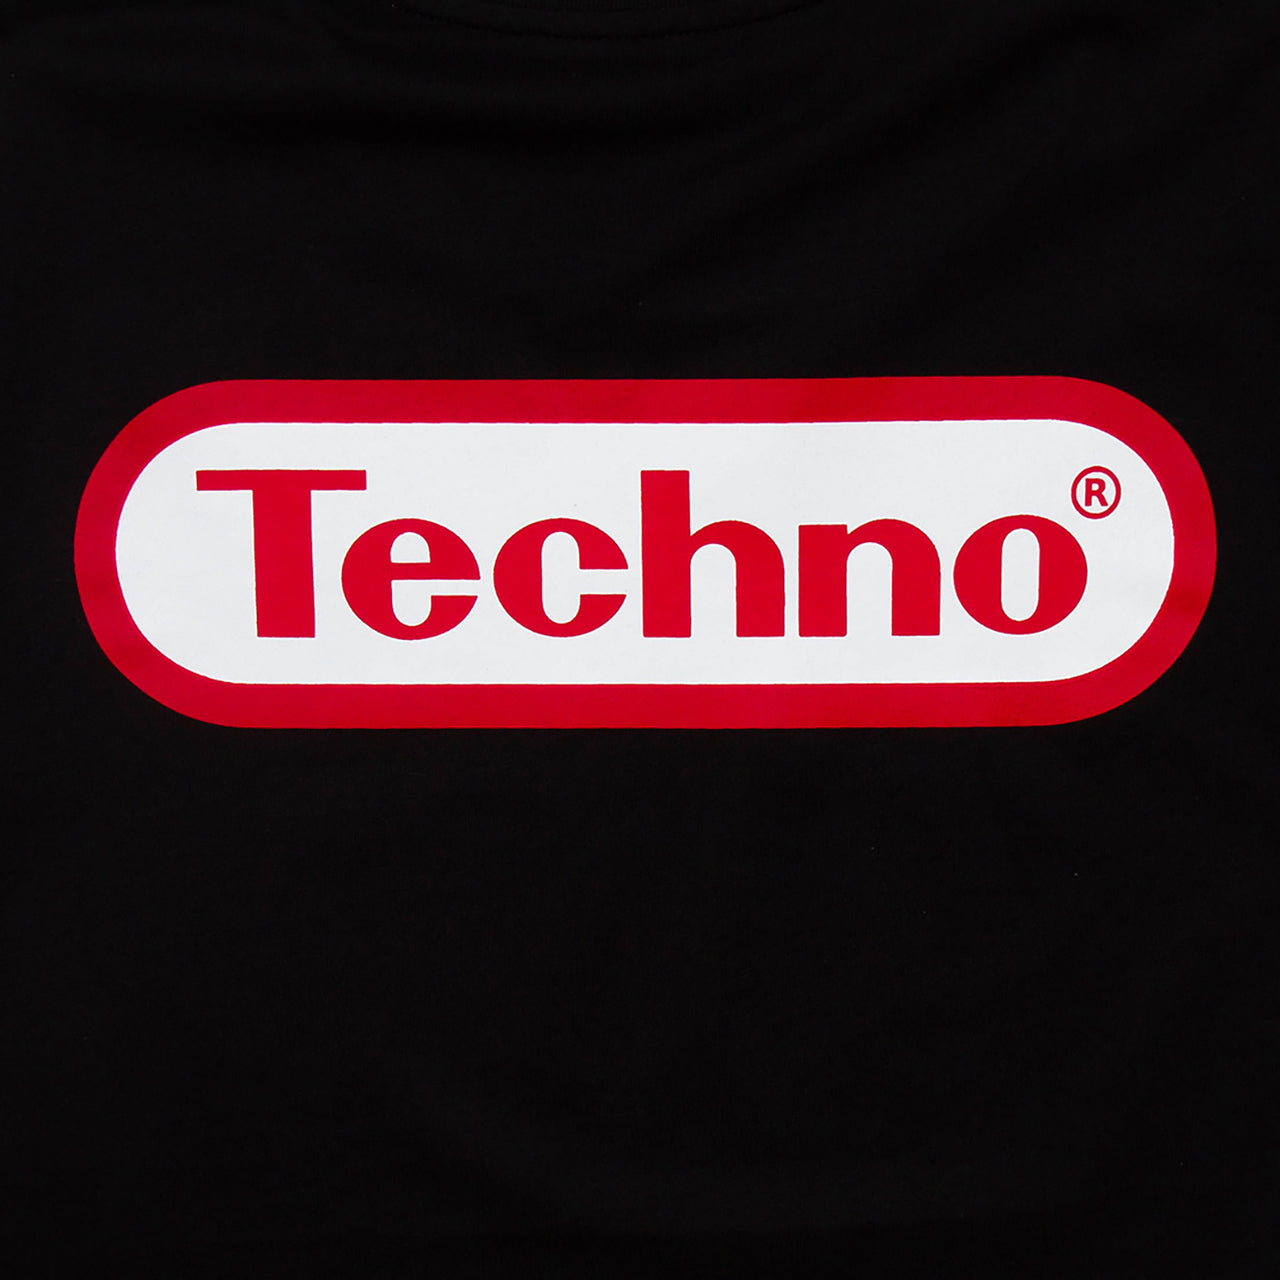 Super Techno Back Print - Tshirt - Black